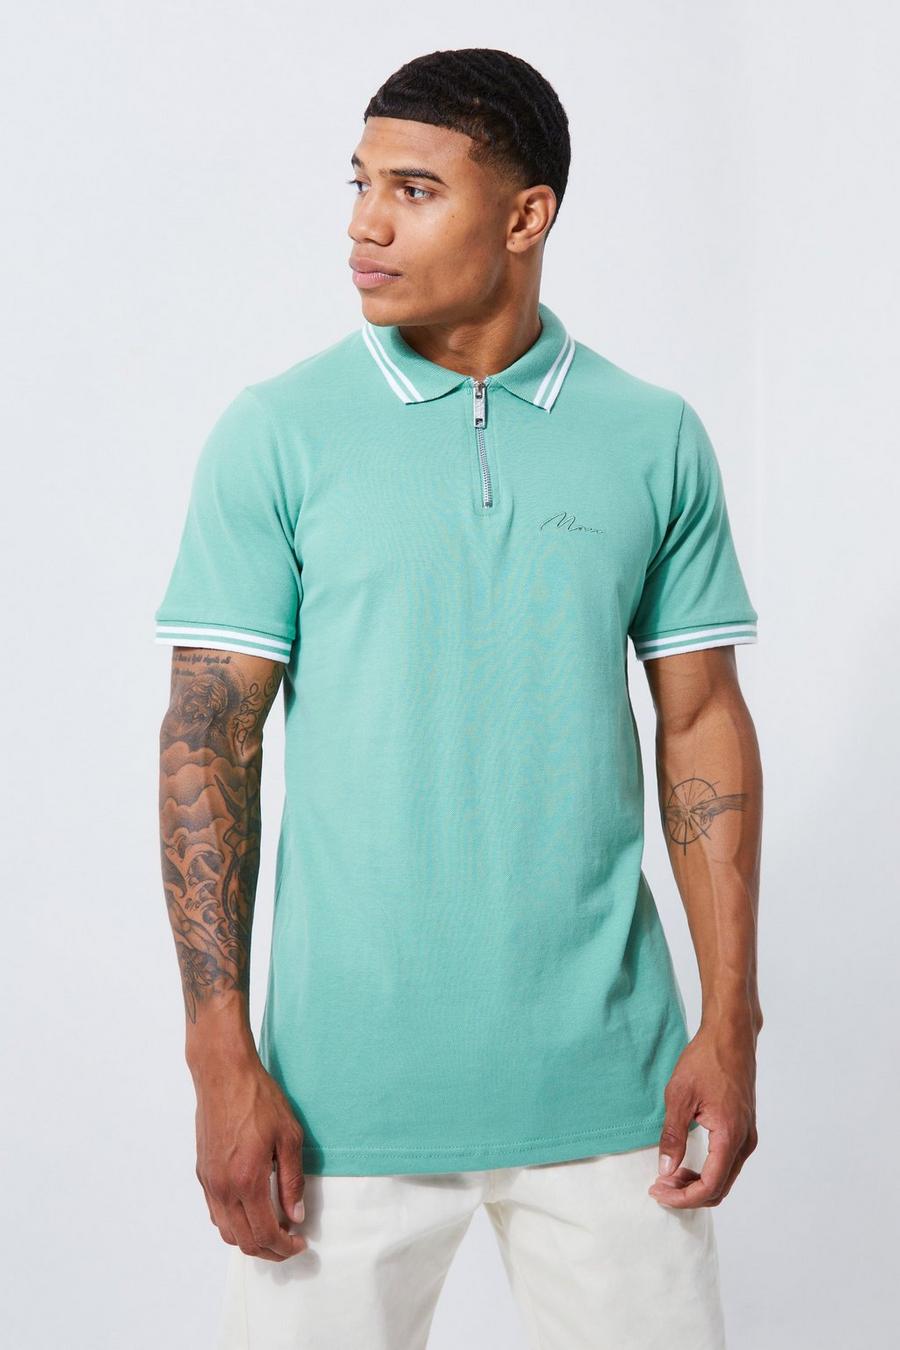 UK Mens Slim Fit Stylish POLO Shirt Short Sleeve Casual T-shirt Tee Tops M-XXXL 